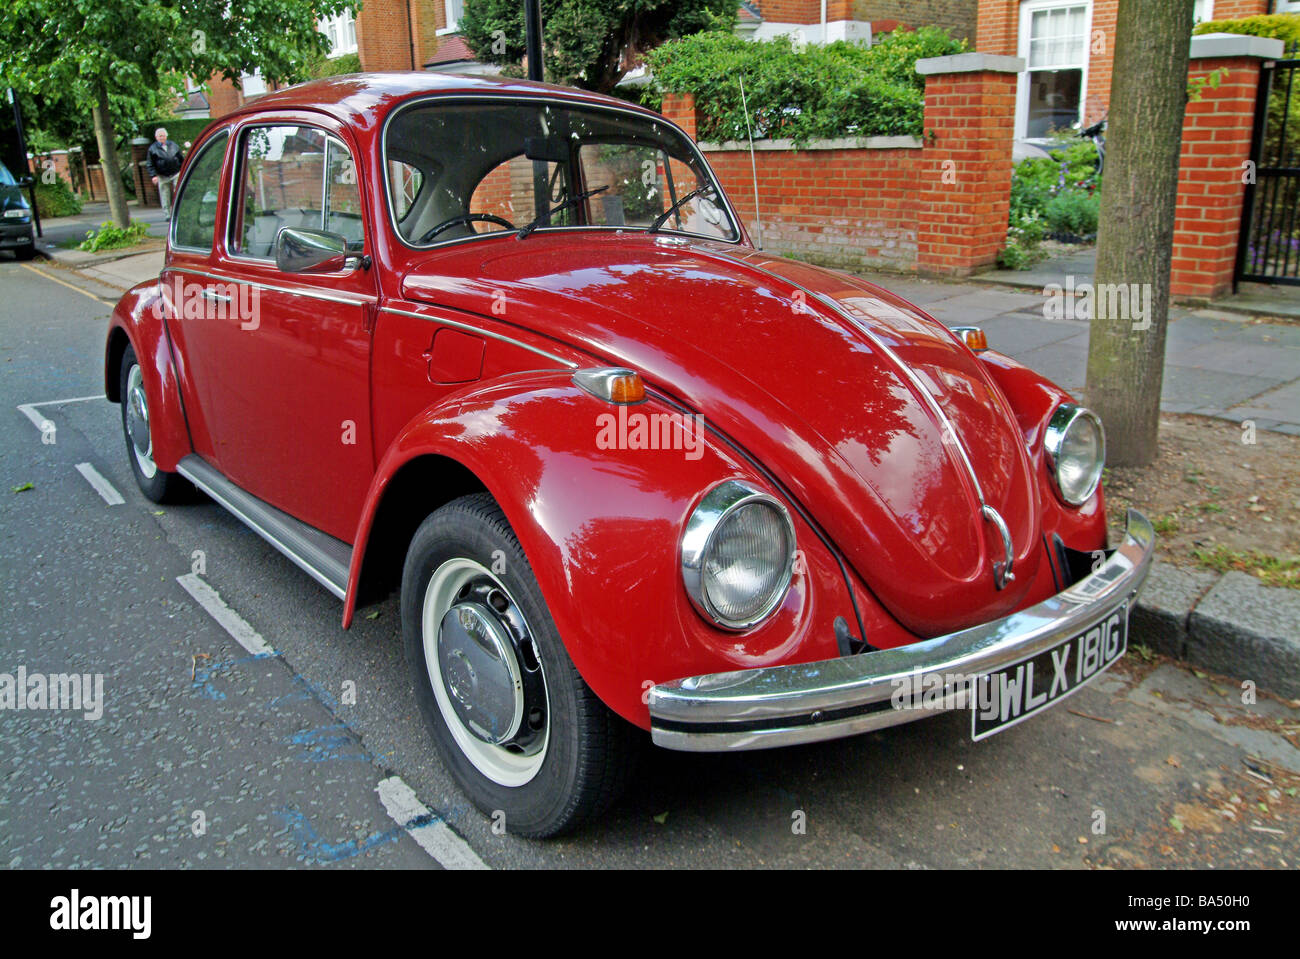 classic red Volkswagen beetle car Stock Photo